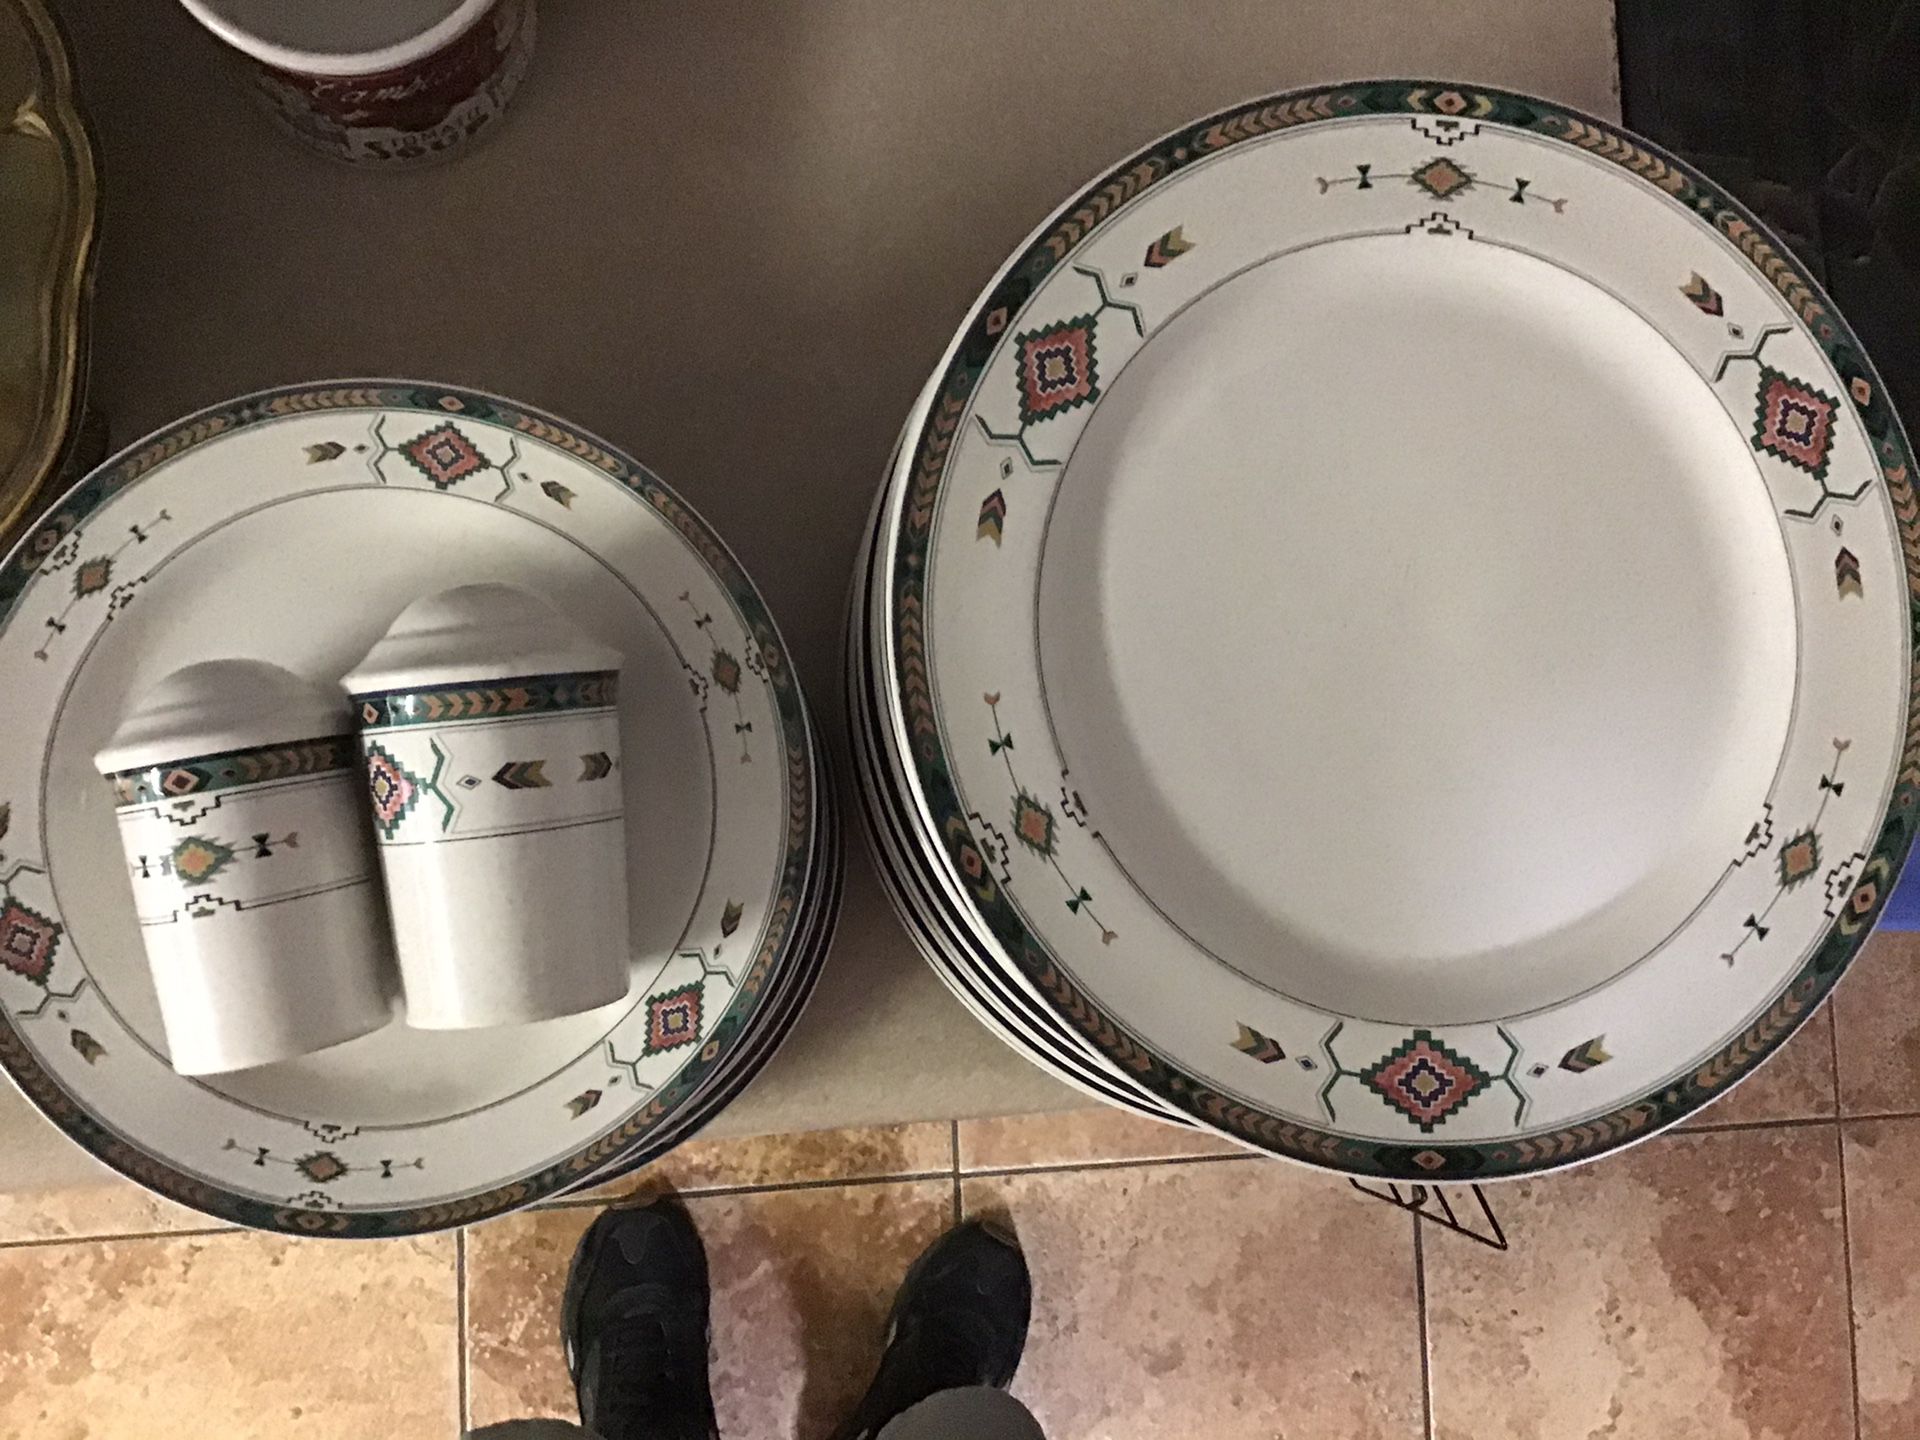 Plates with salt n pepper shaker